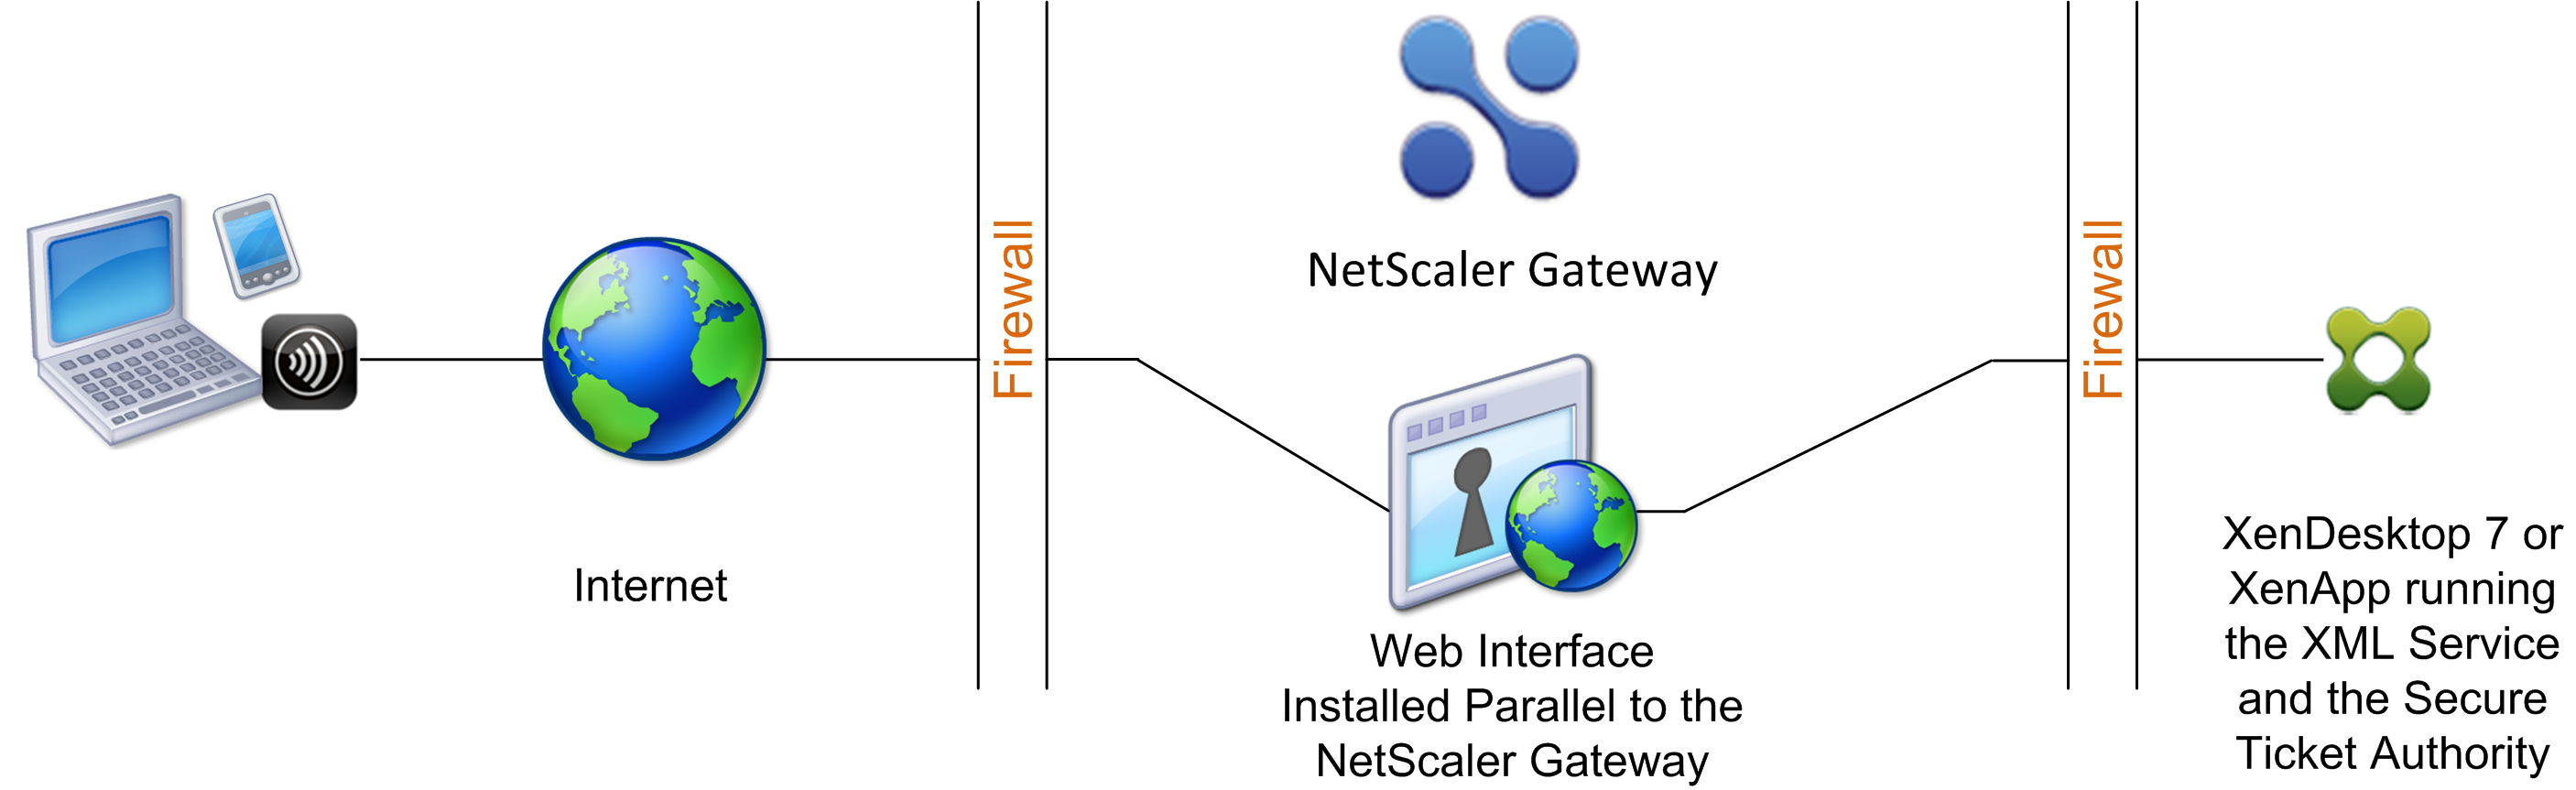 Web Interface Running Parallel to Citrix Gateway